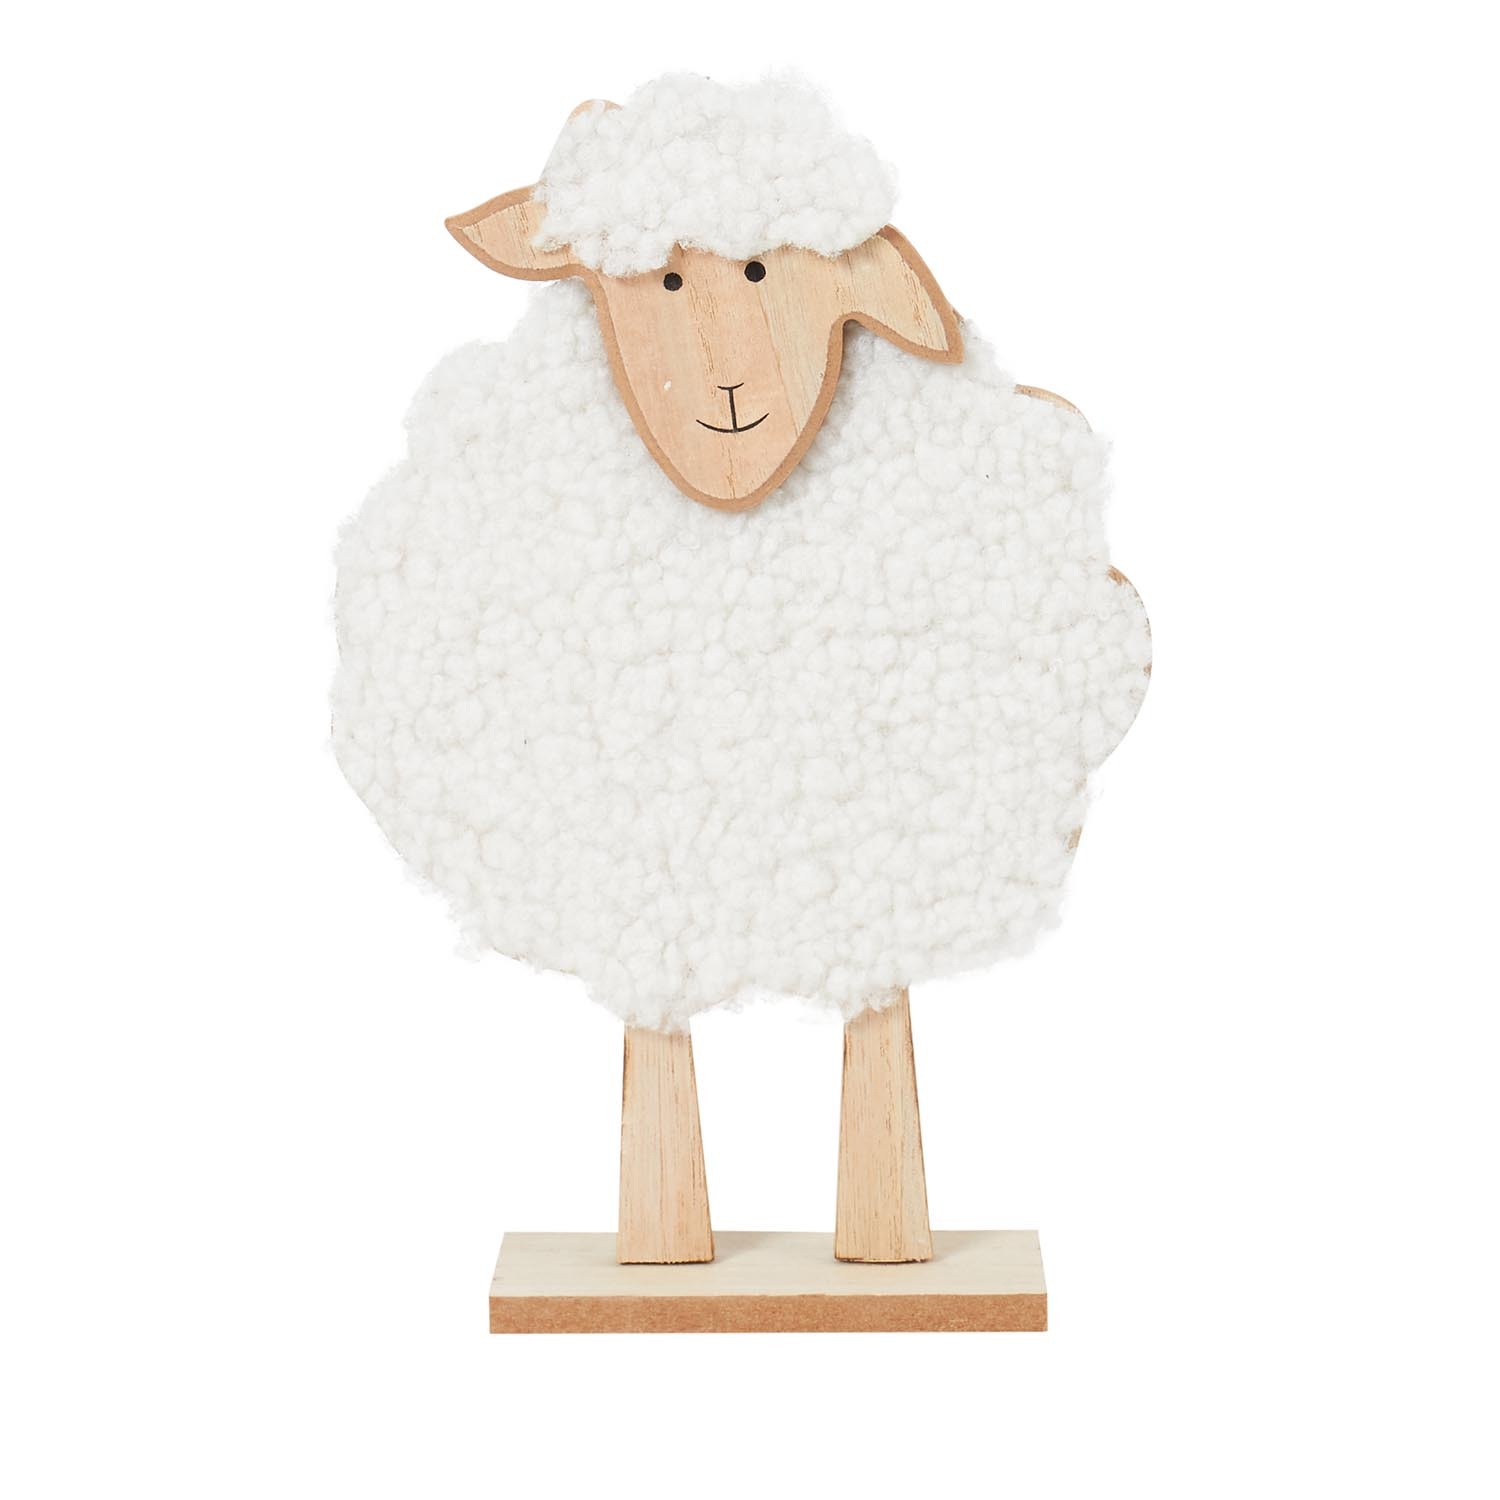 Woolly Sheep Image 1